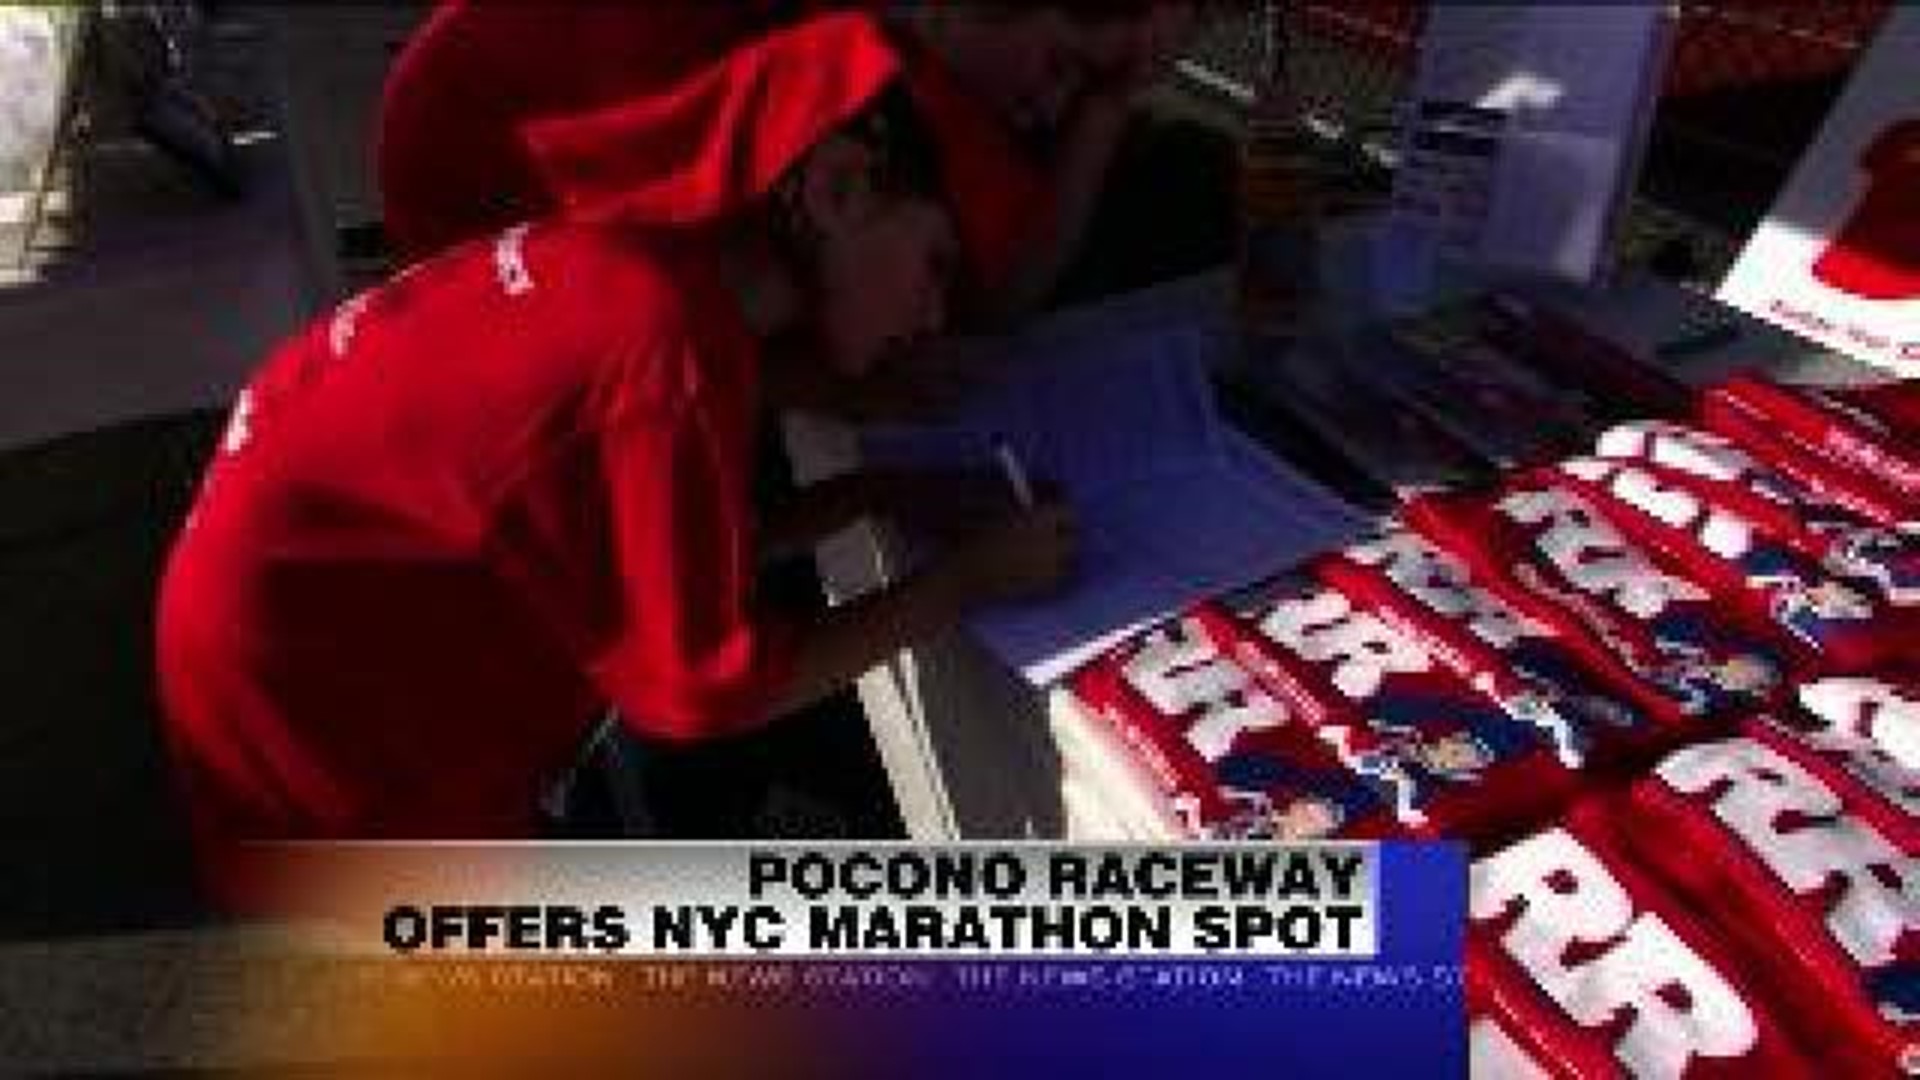 Pocono Raceway Gives to WNEP-TV's Ryan's Run